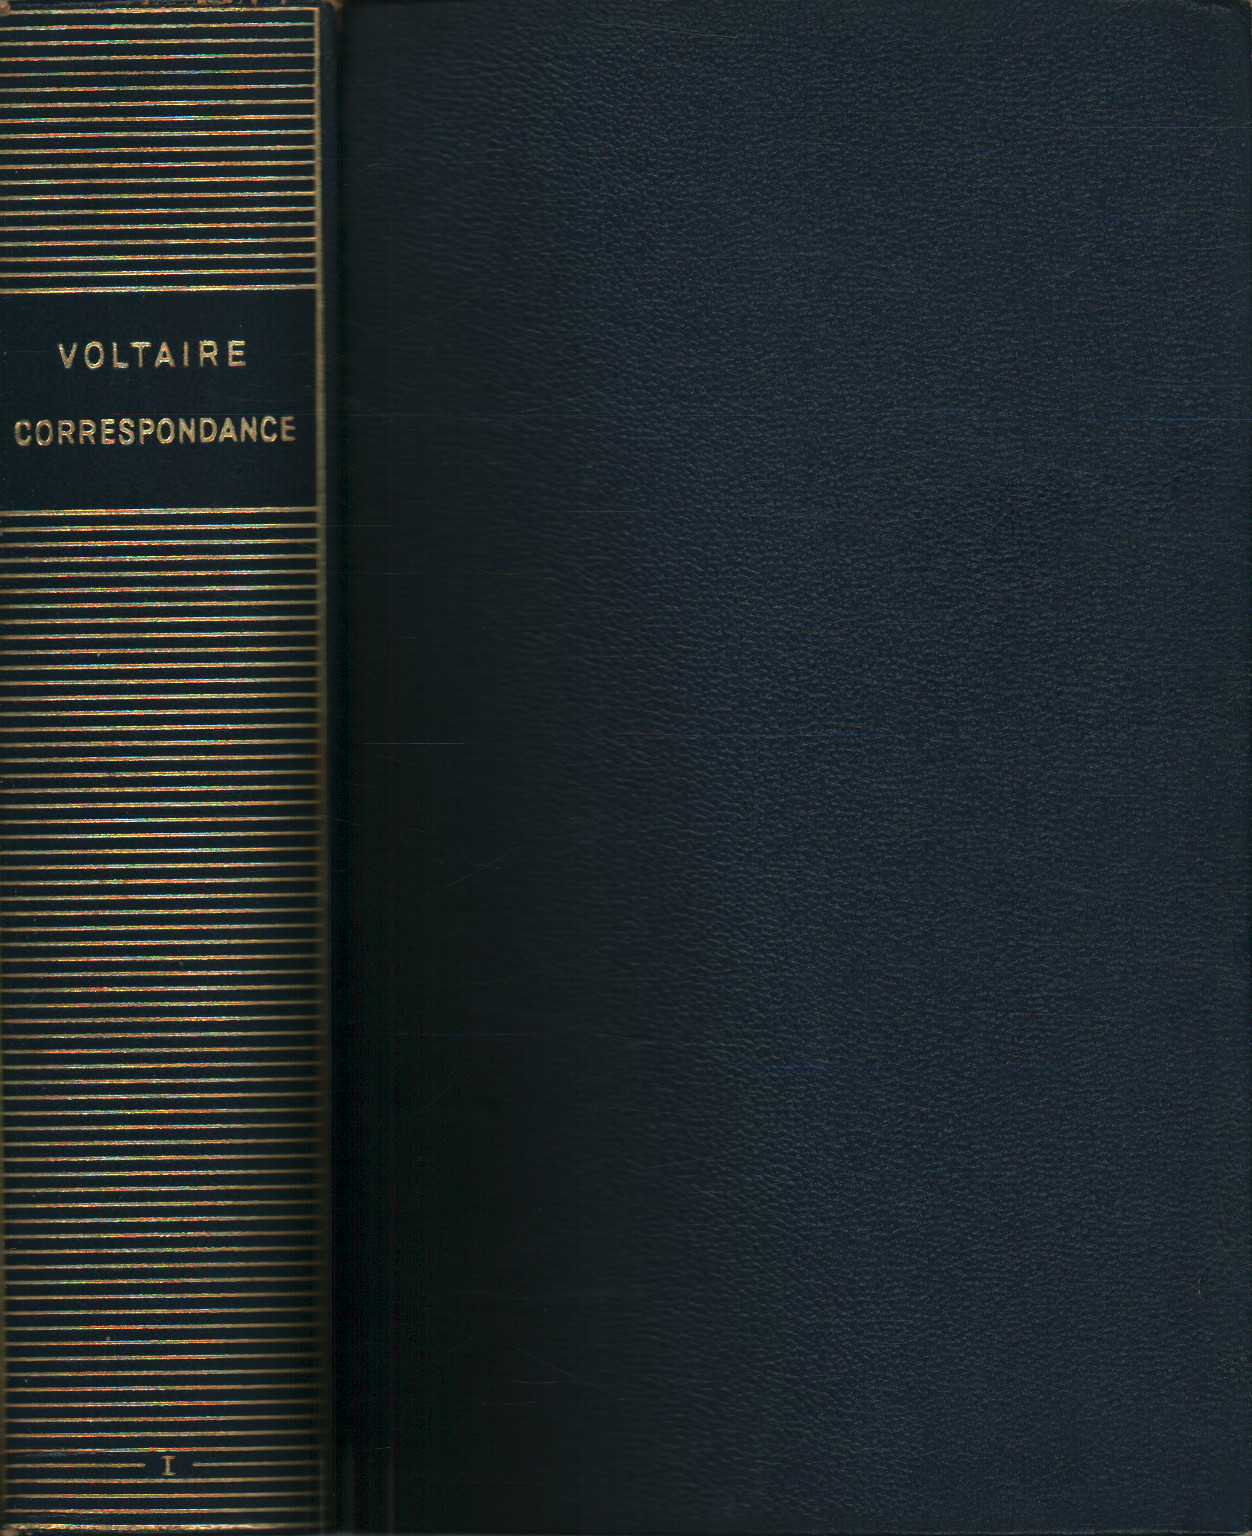 Corrispondance de Voltaire (tomo I), s.a.